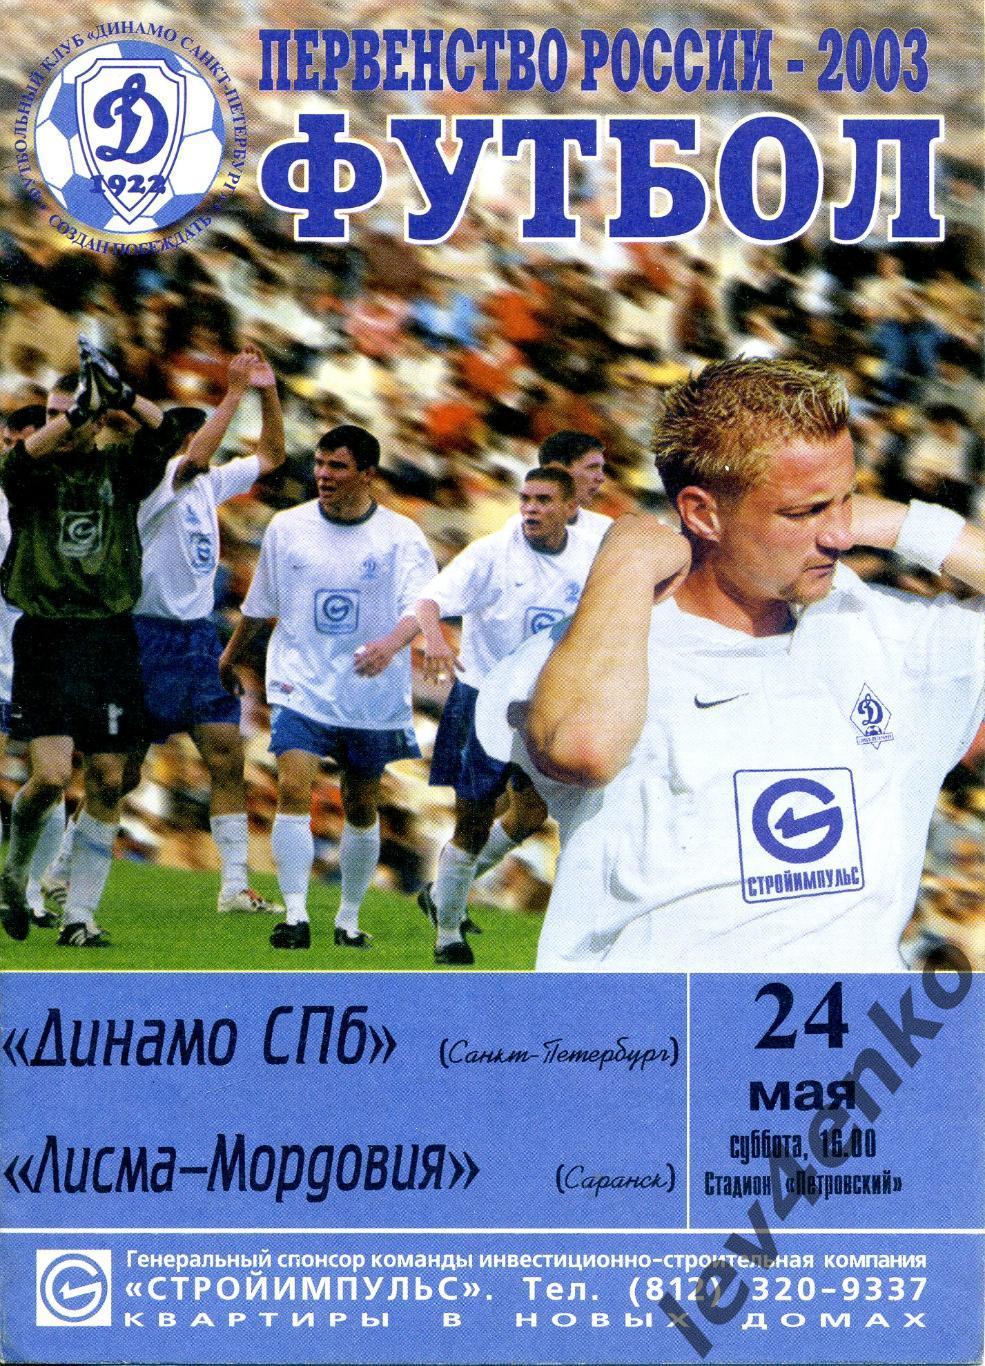 Динамо СПб (Санкт-Петербург) - Лисма-Мордовия (Саранск) 24.05.2003